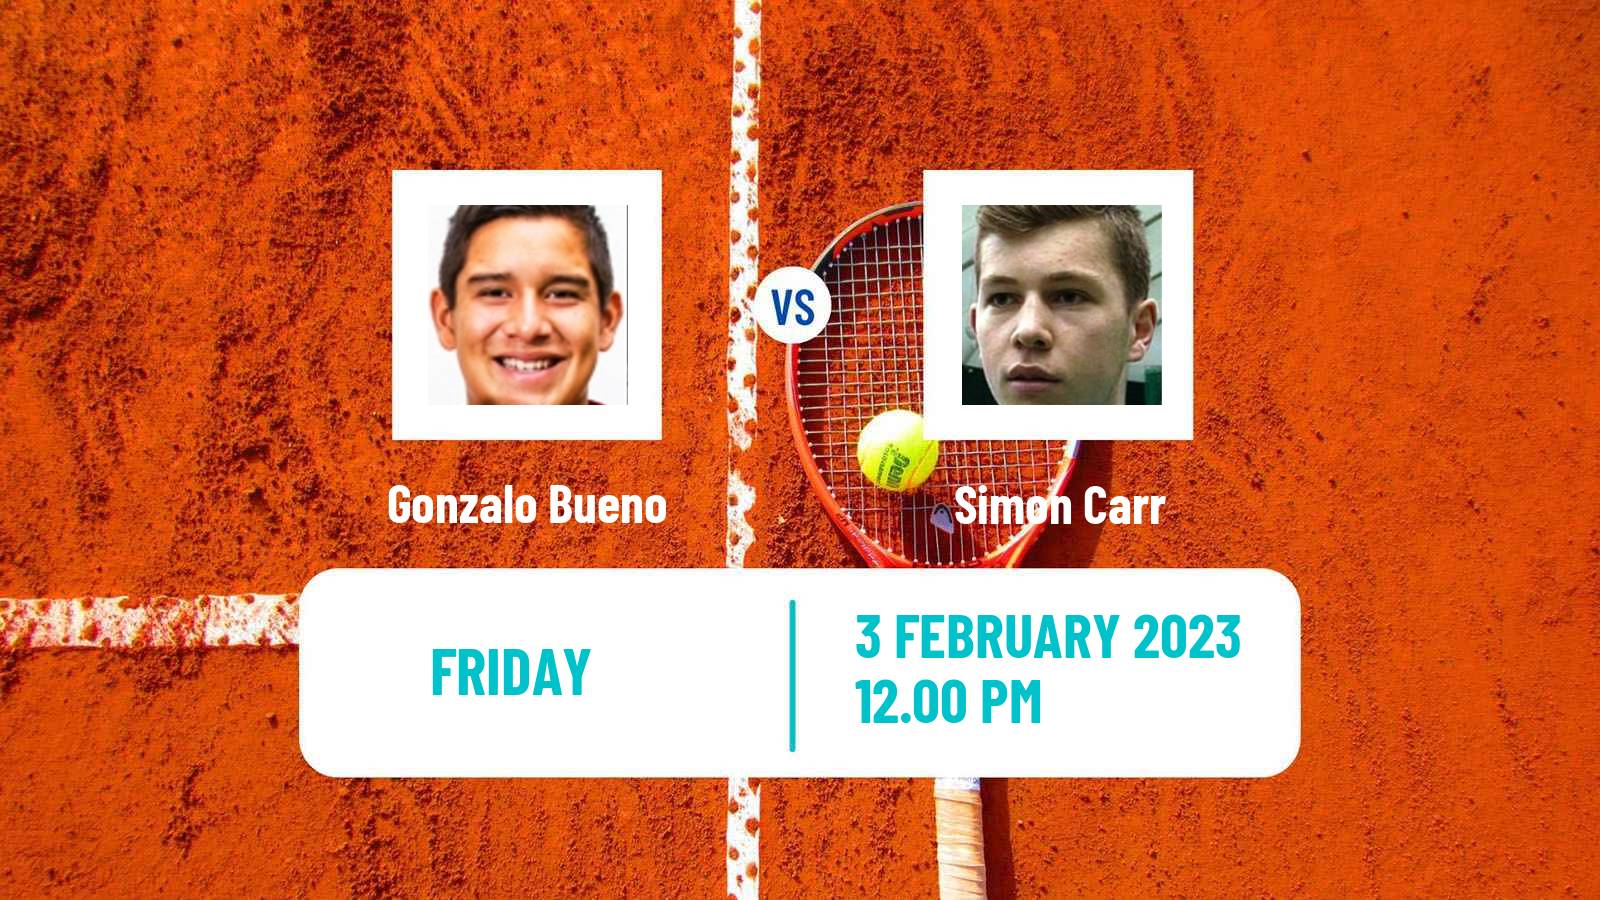 Tennis Davis Cup World Group I Gonzalo Bueno - Simon Carr